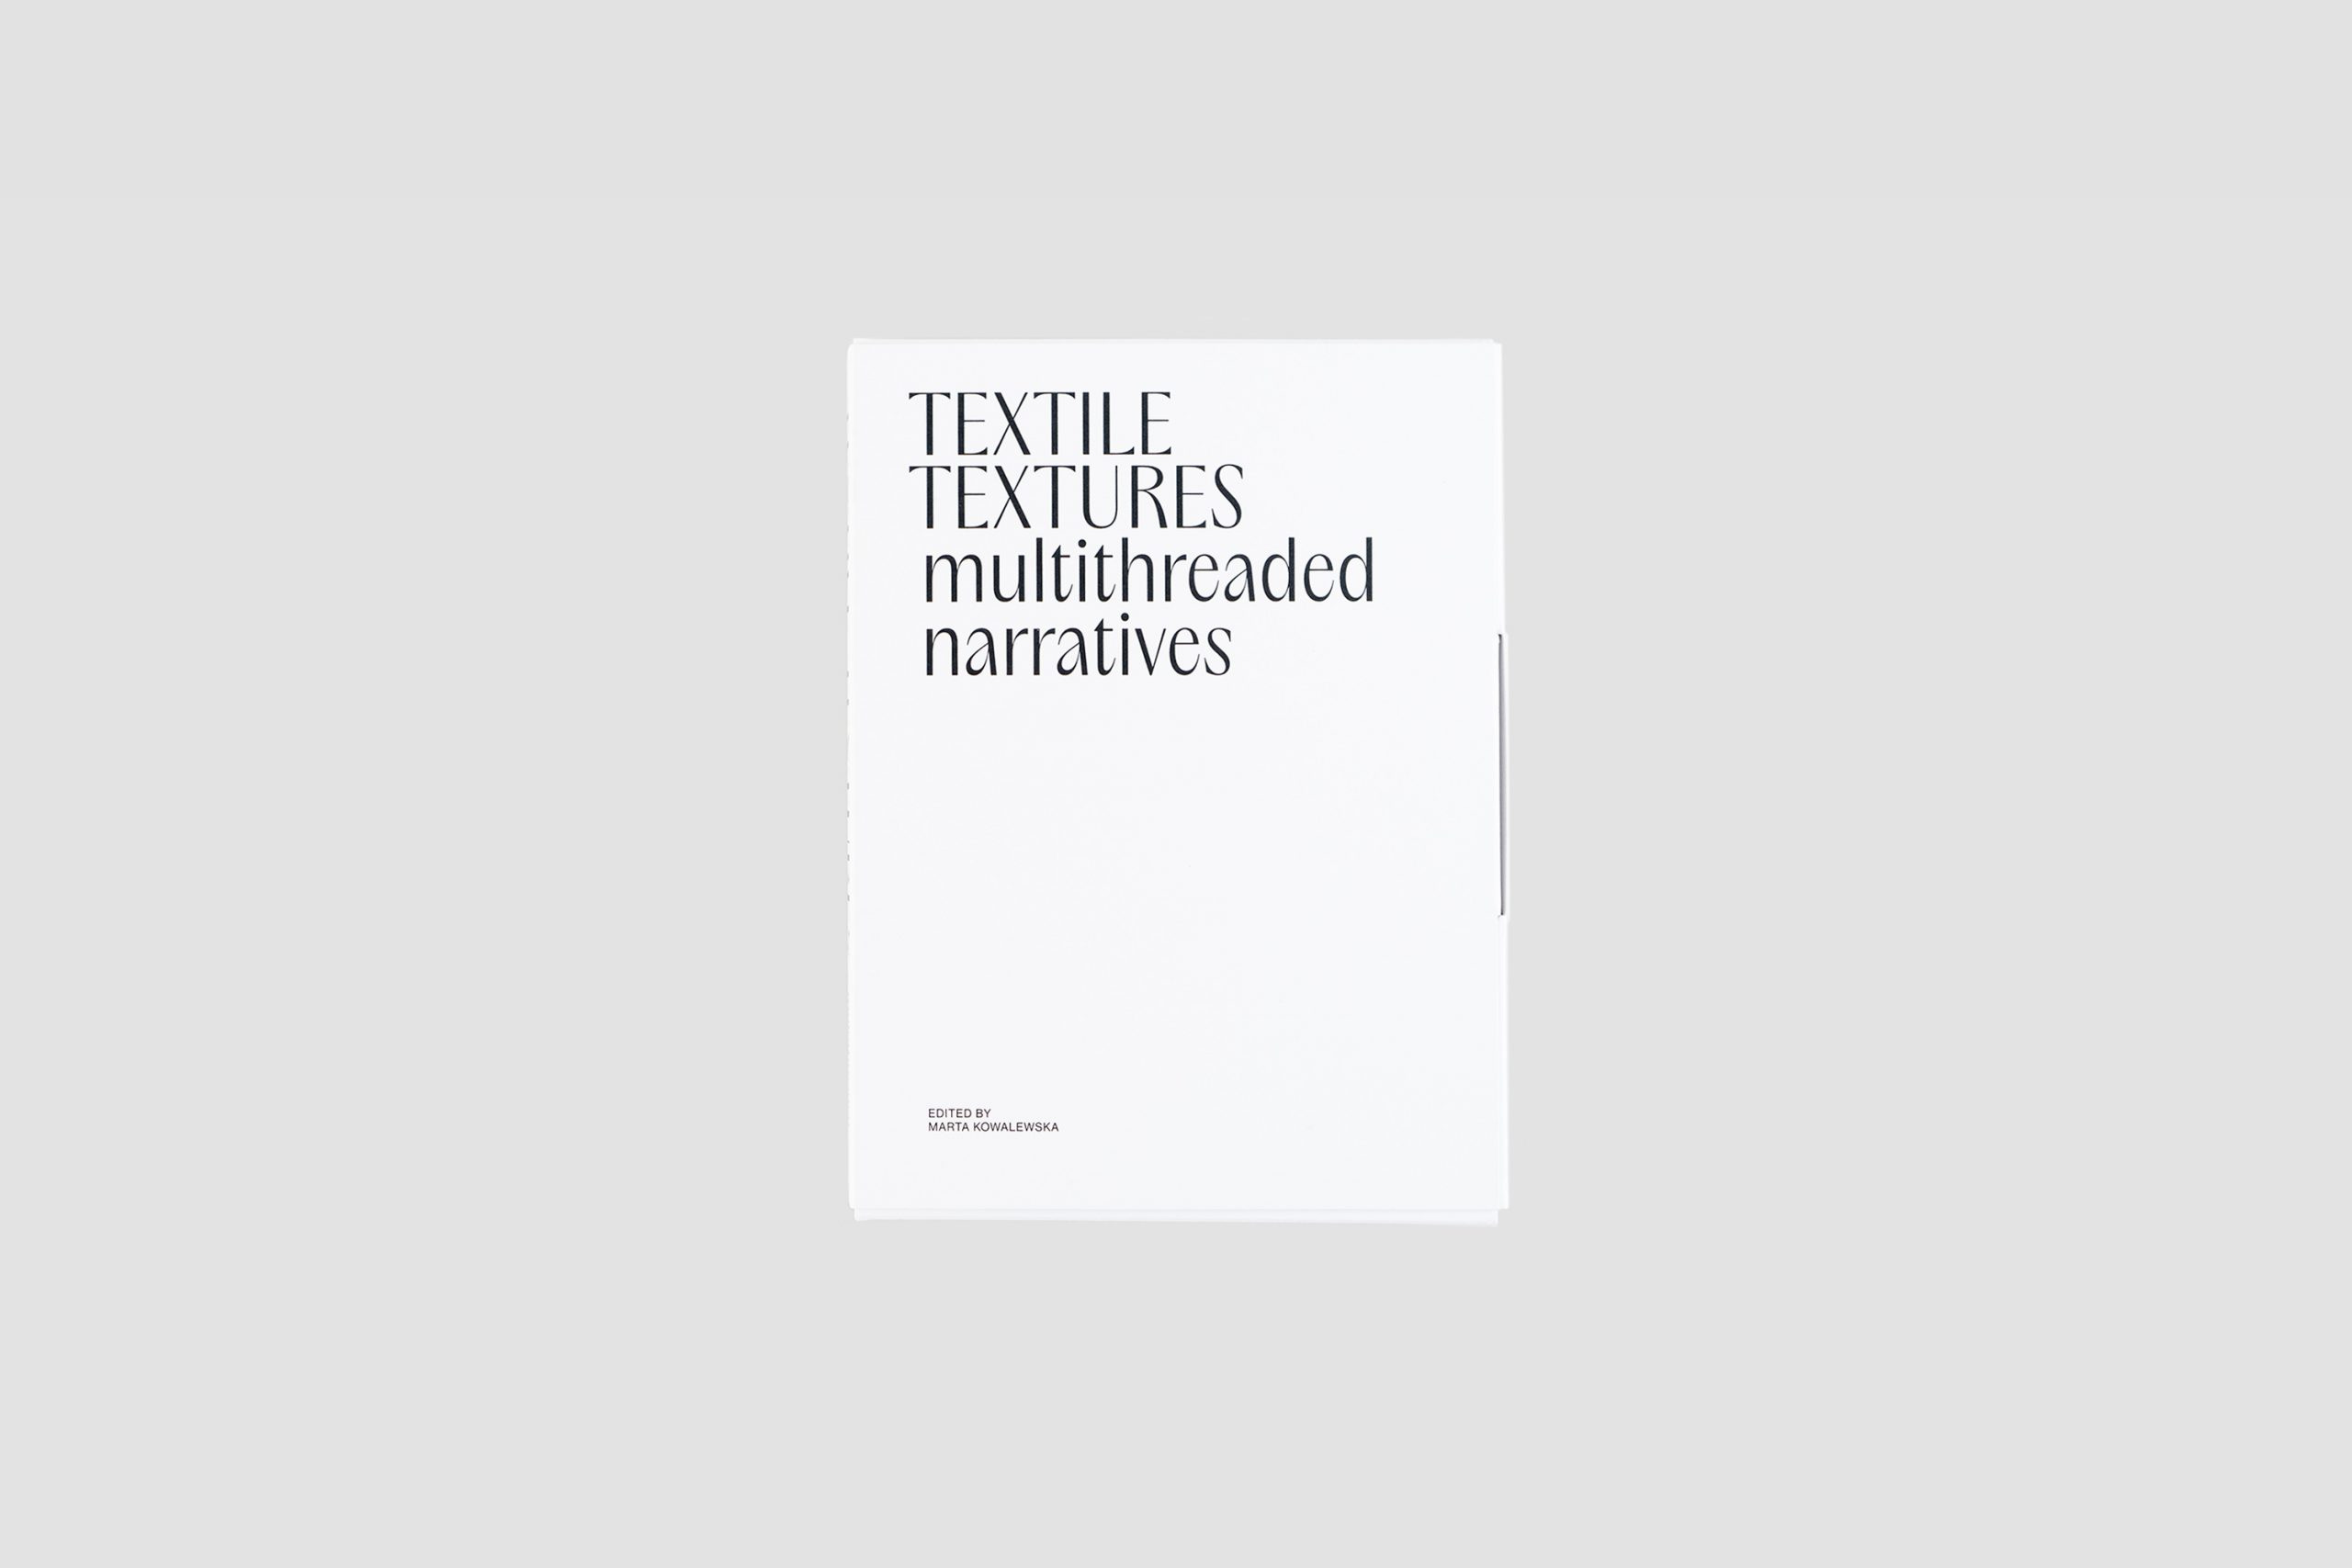 Textile Textures: Multithreaded Narratives